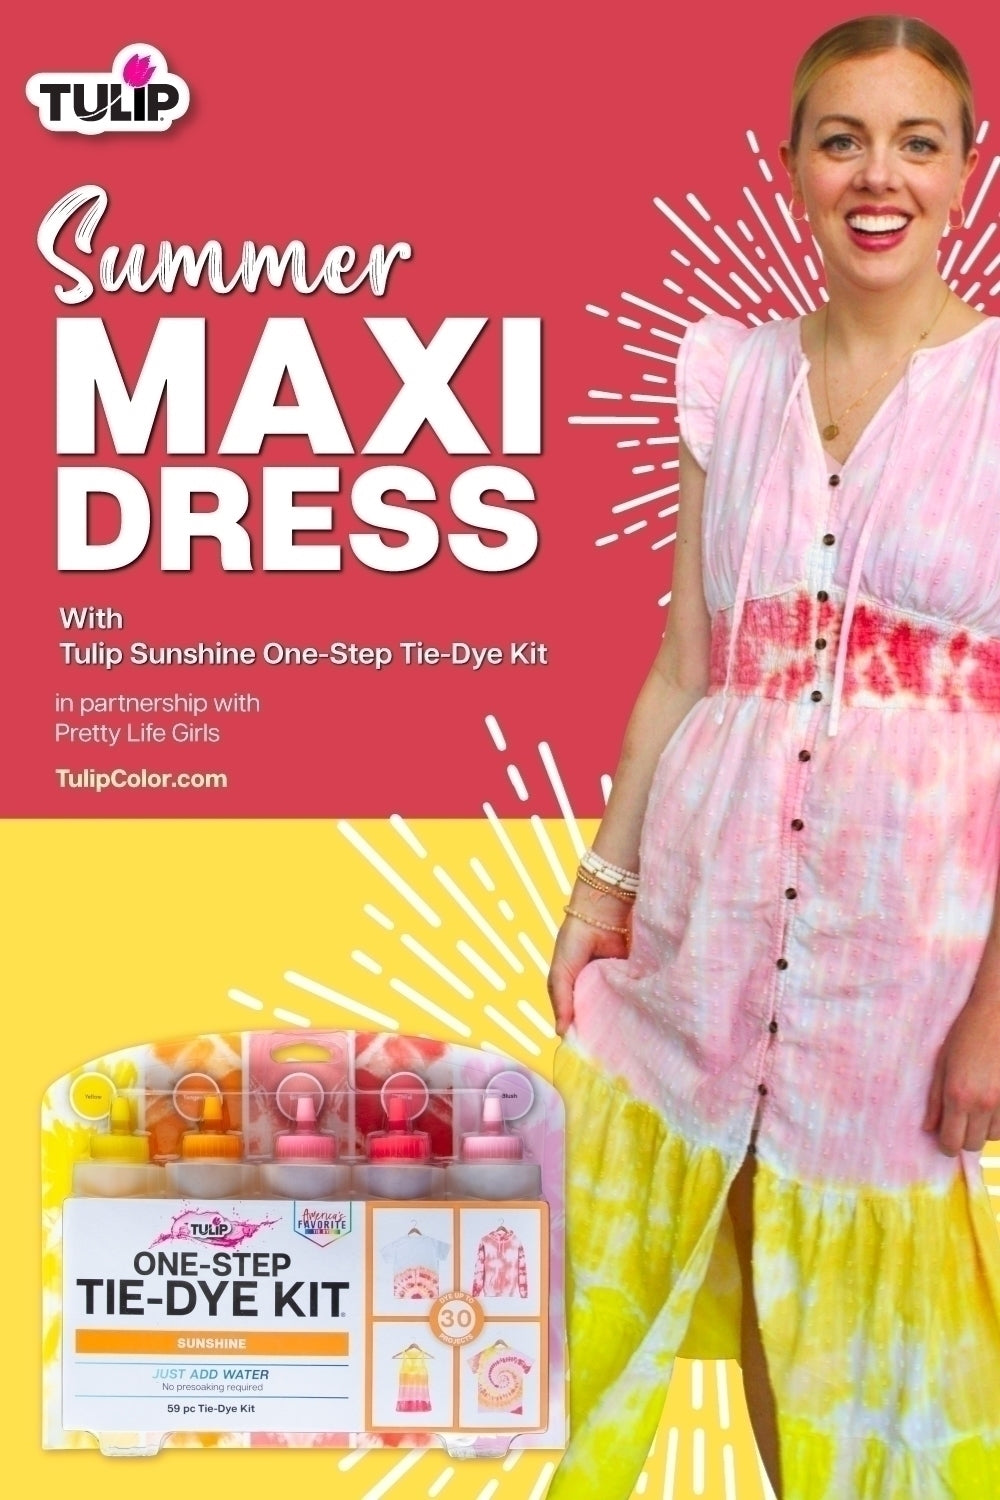 Tie-Dye Maxi Dress for Summer